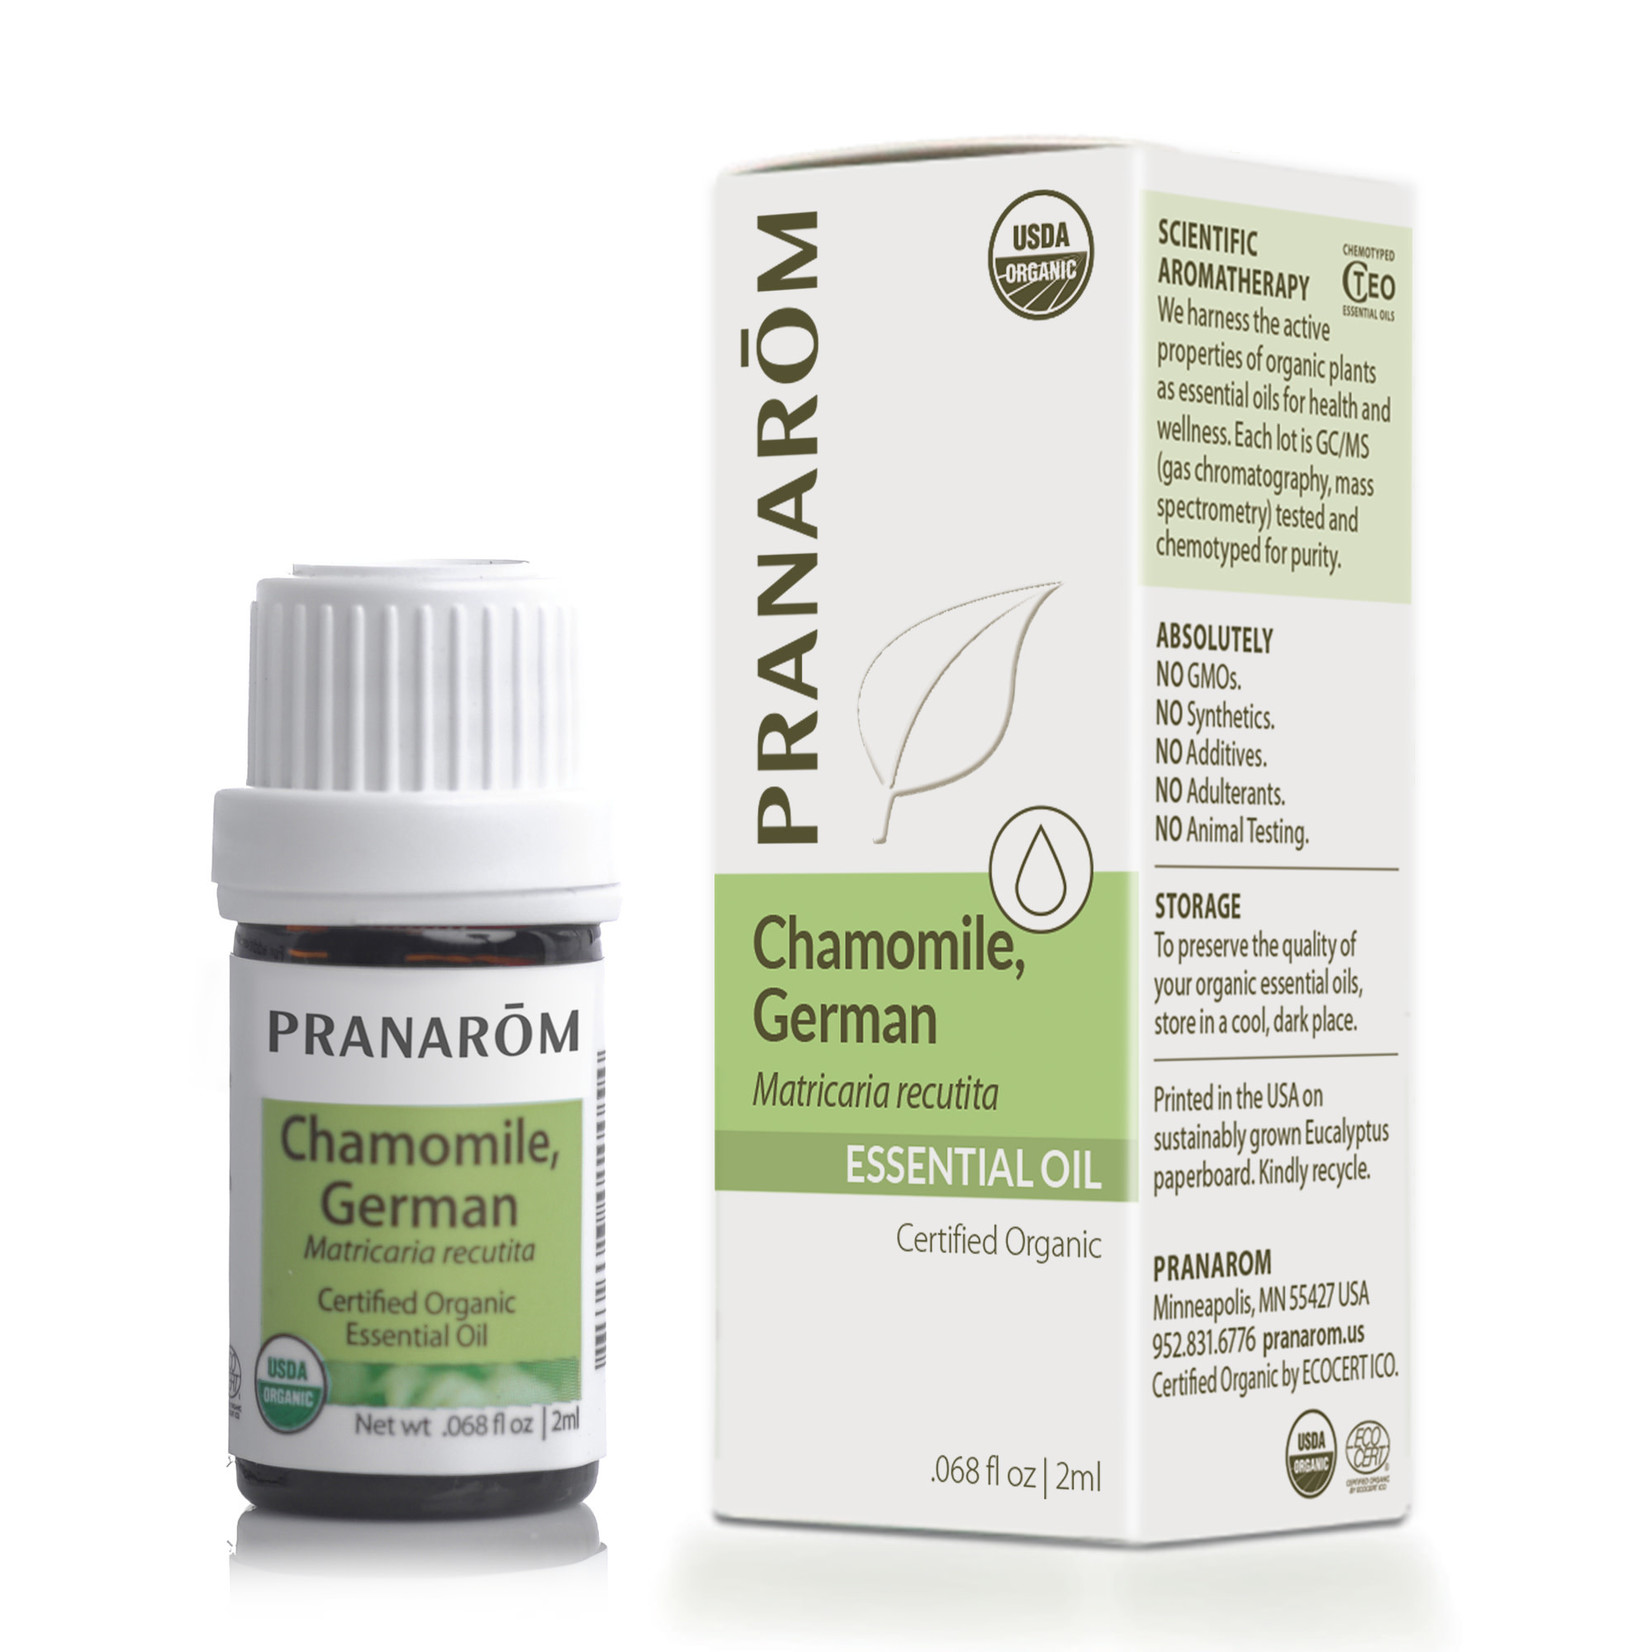 Pranarom chamomile, german